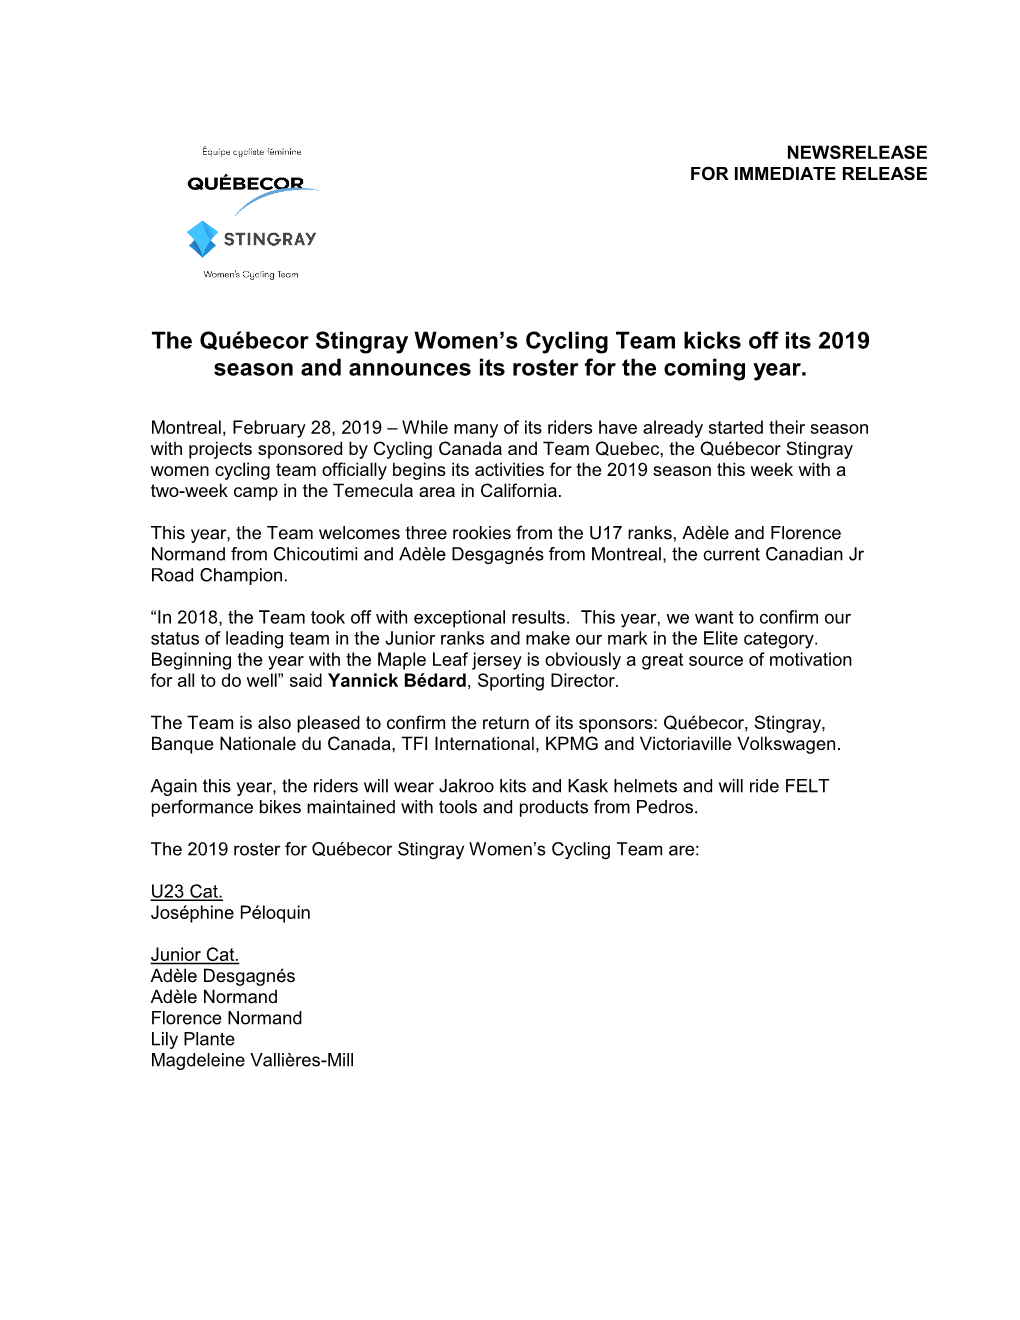 The Québecor Stingray Women's Cycling Team Kicks Off Its 2019